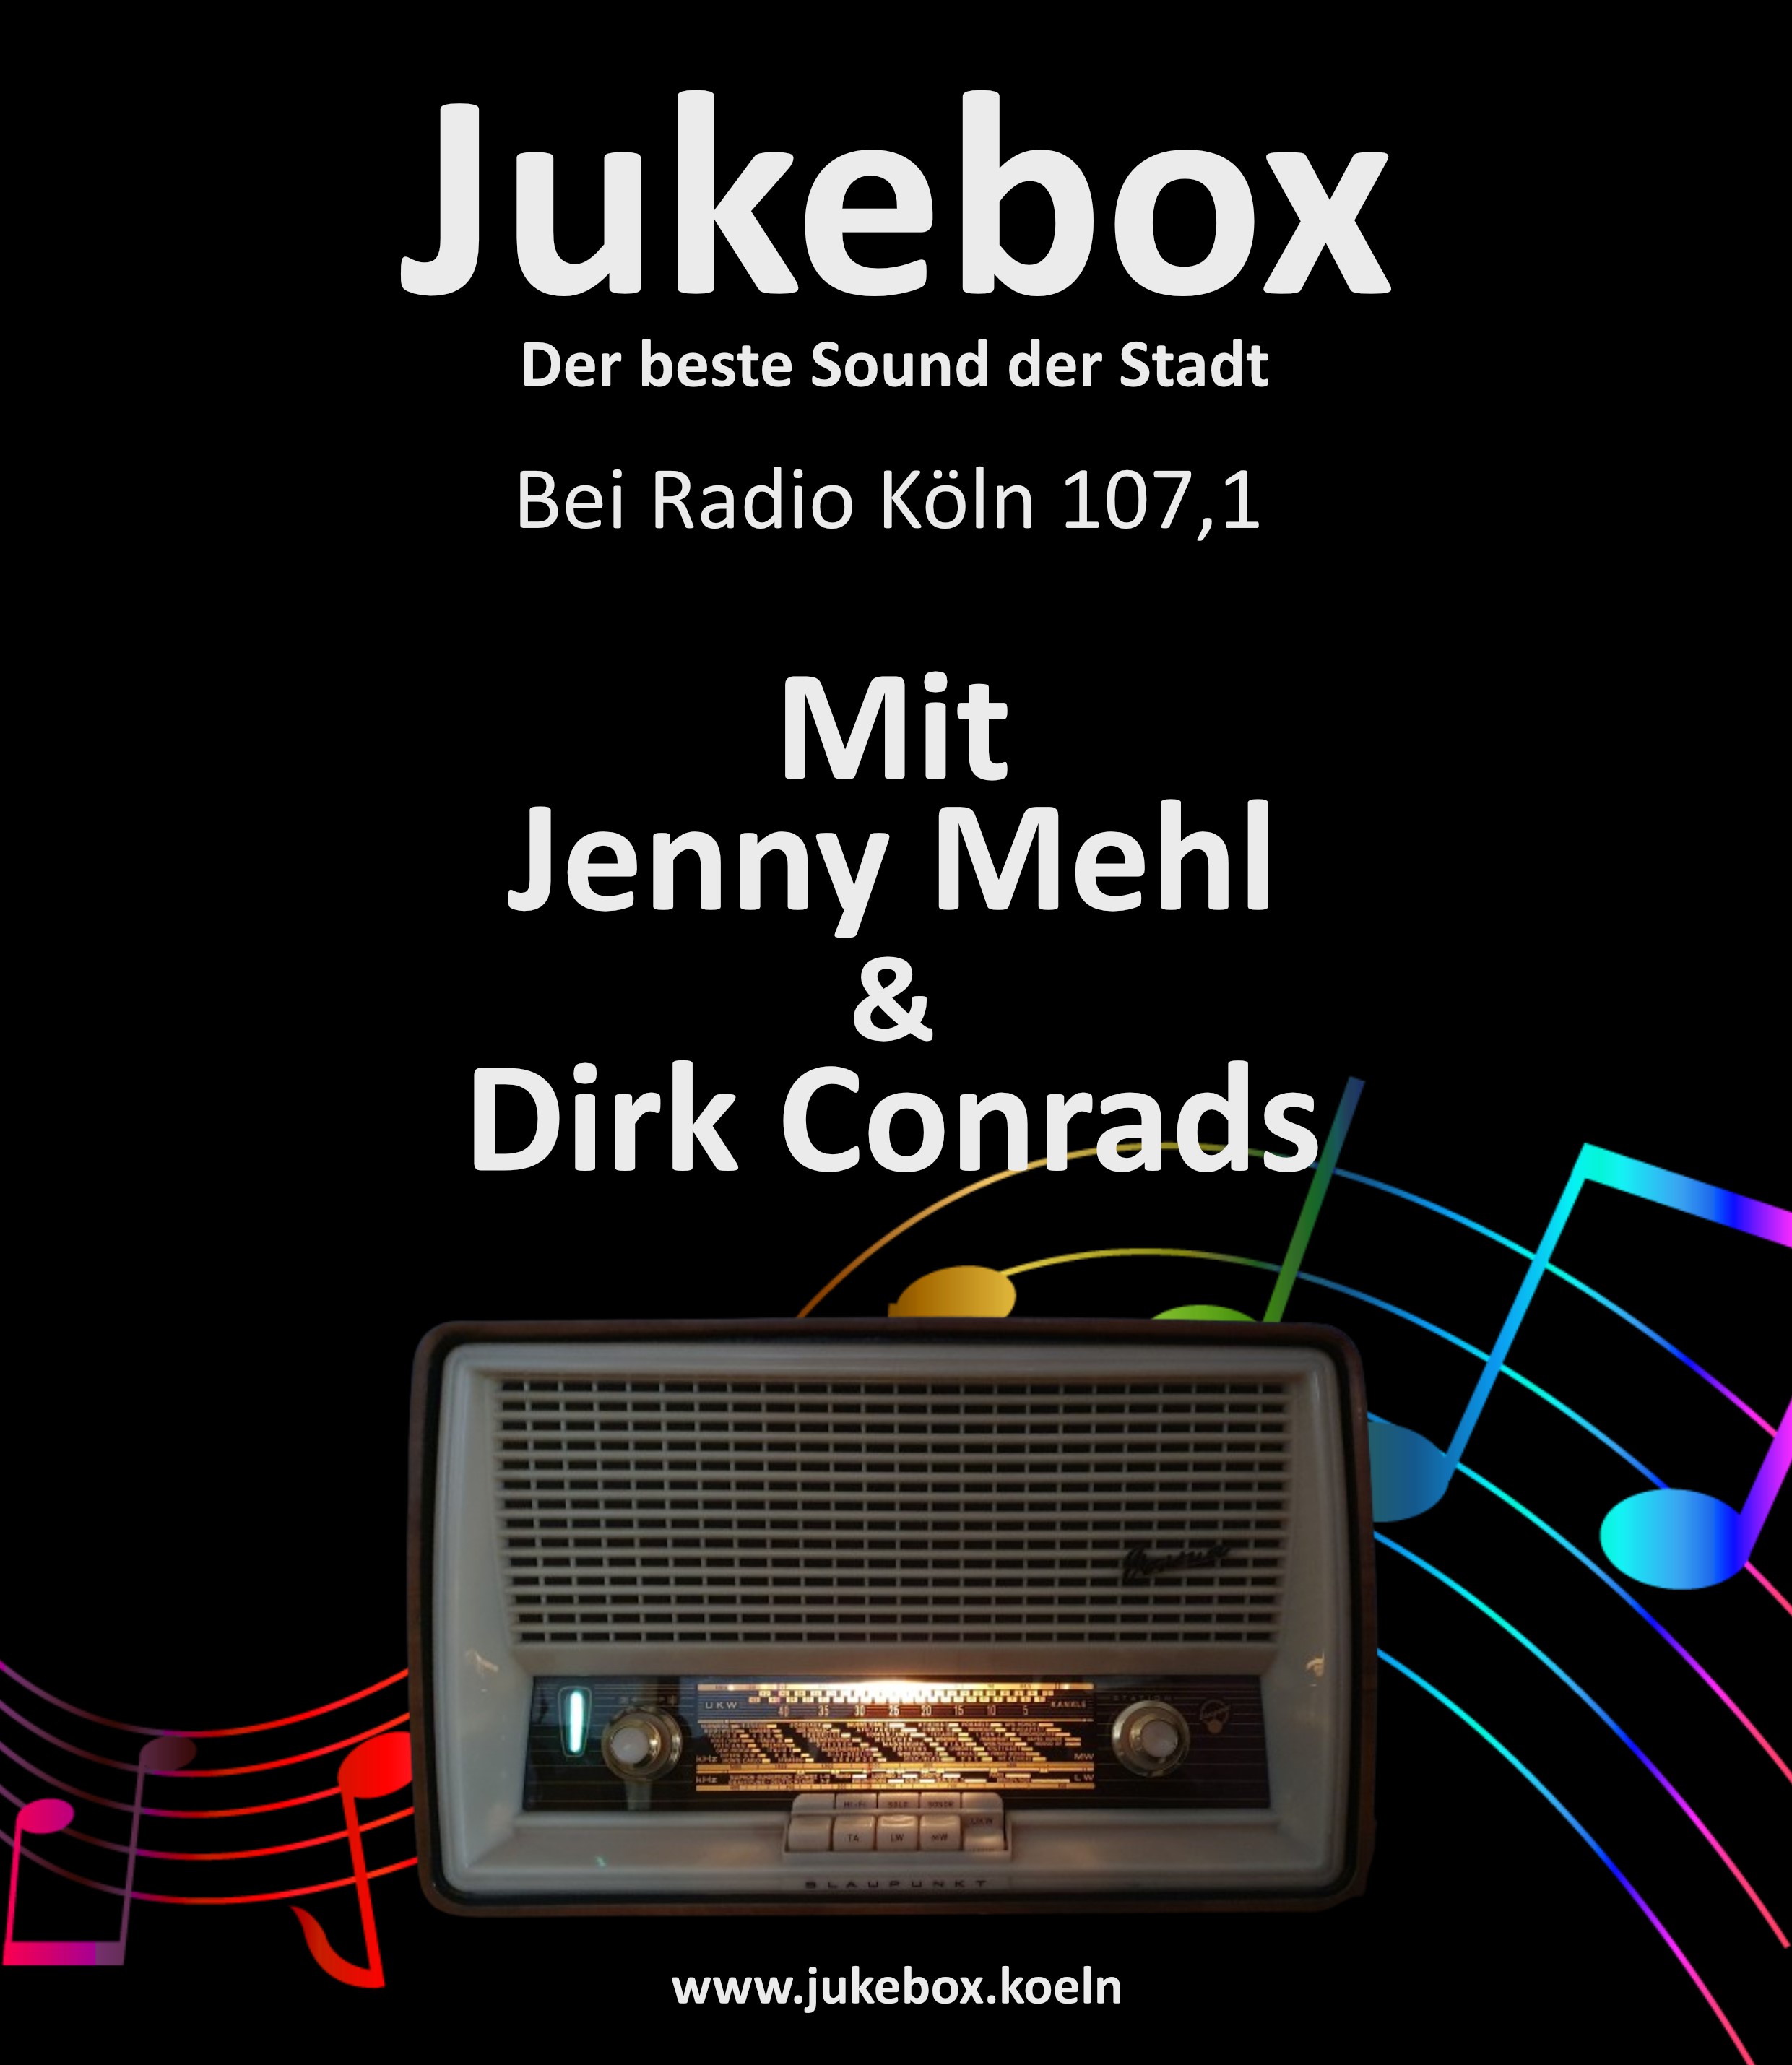 (c) Jukebox.koeln